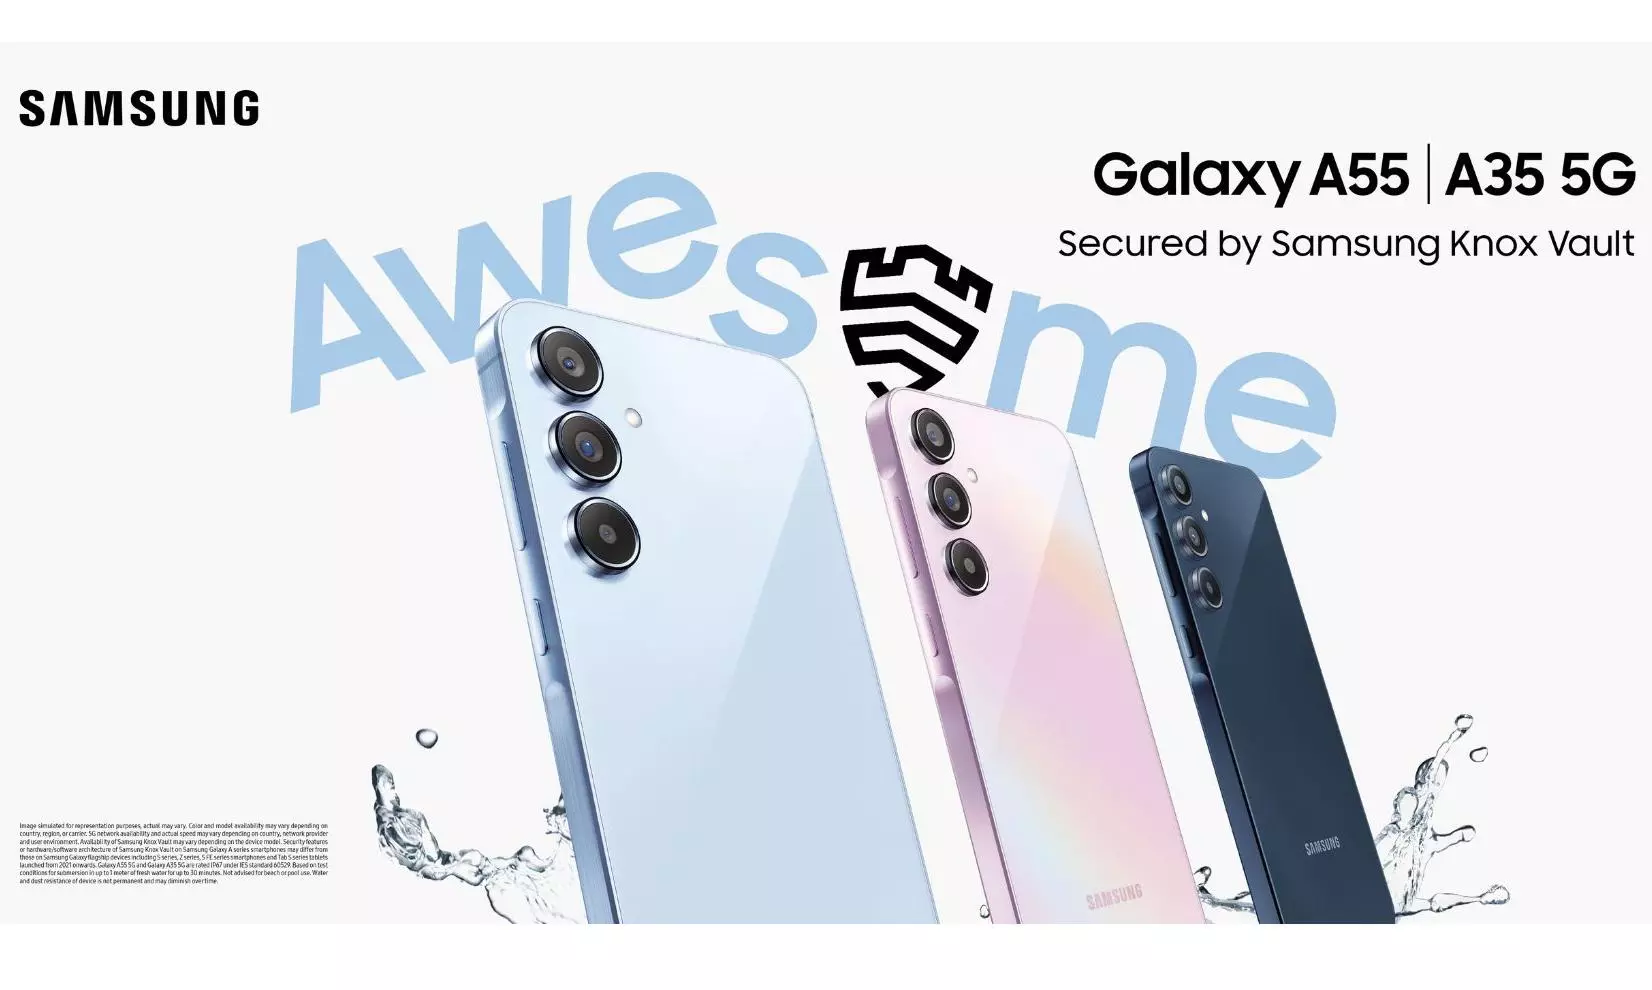 Samsung Innovations for Galaxy A55, A35